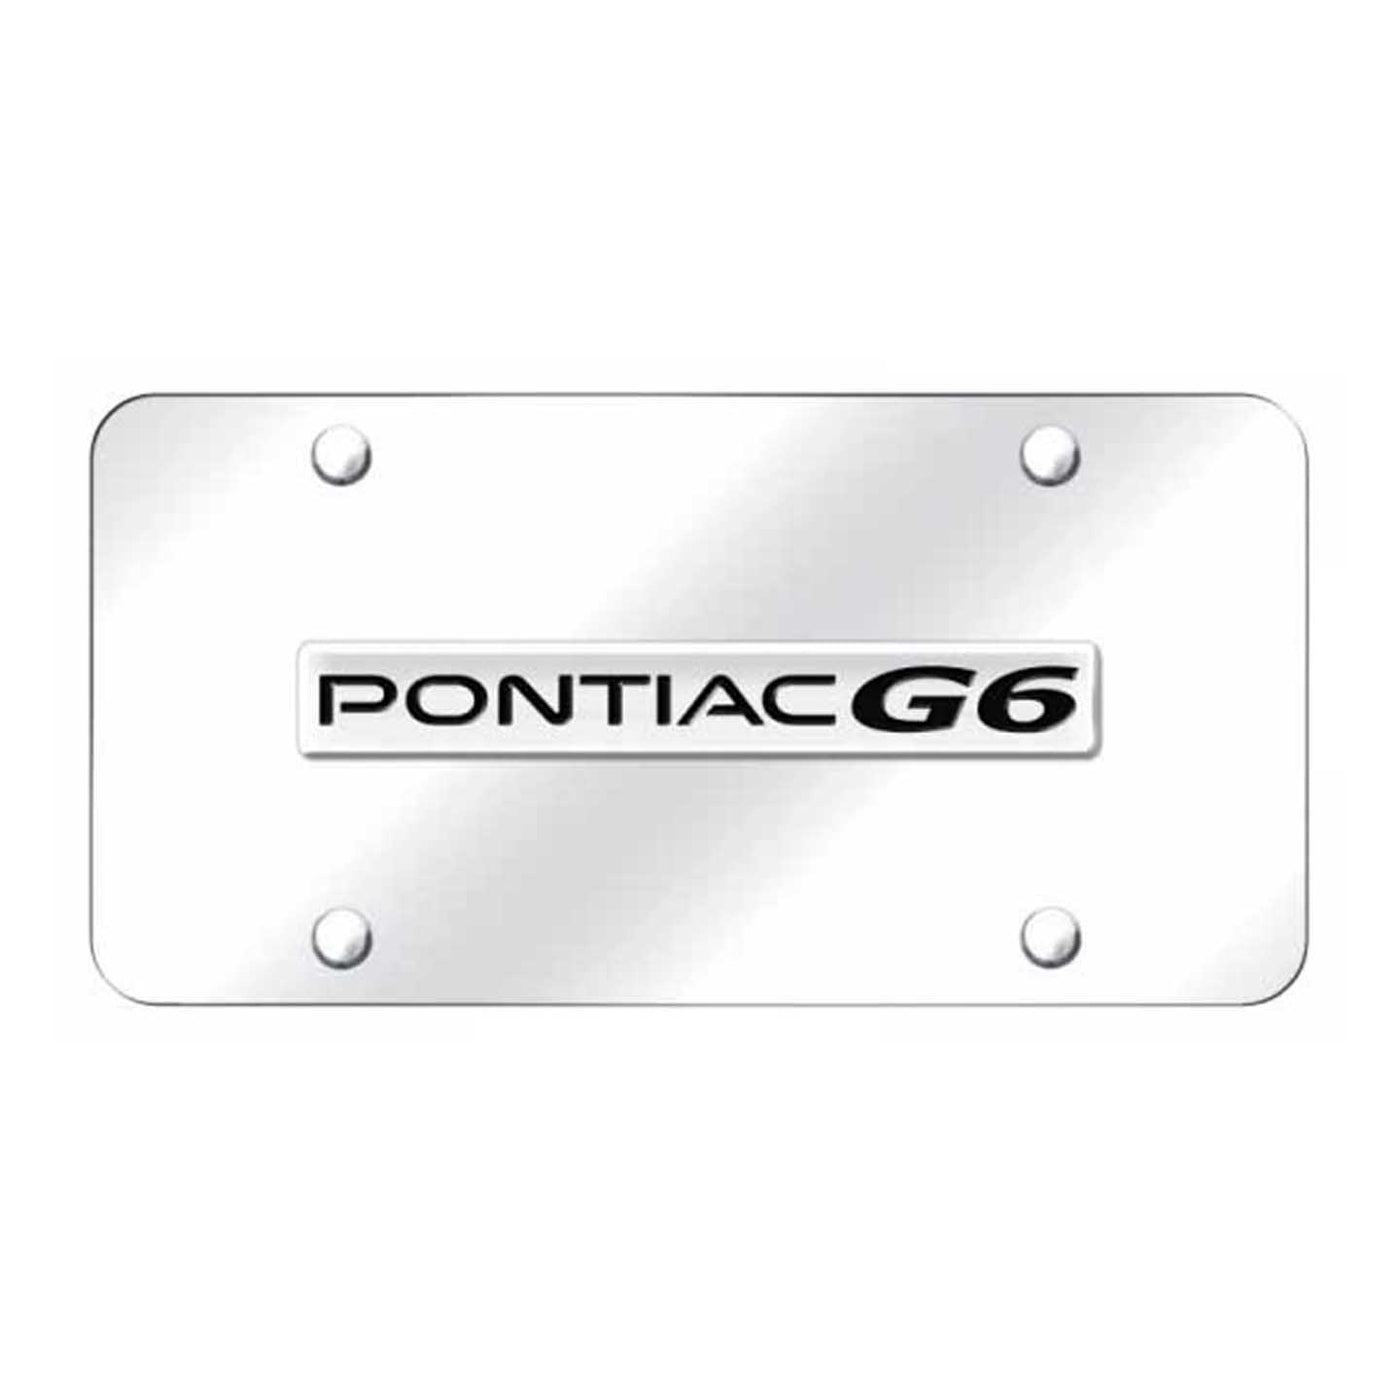 Pontiac G6 Name License Plate - Chrome on Mirrored